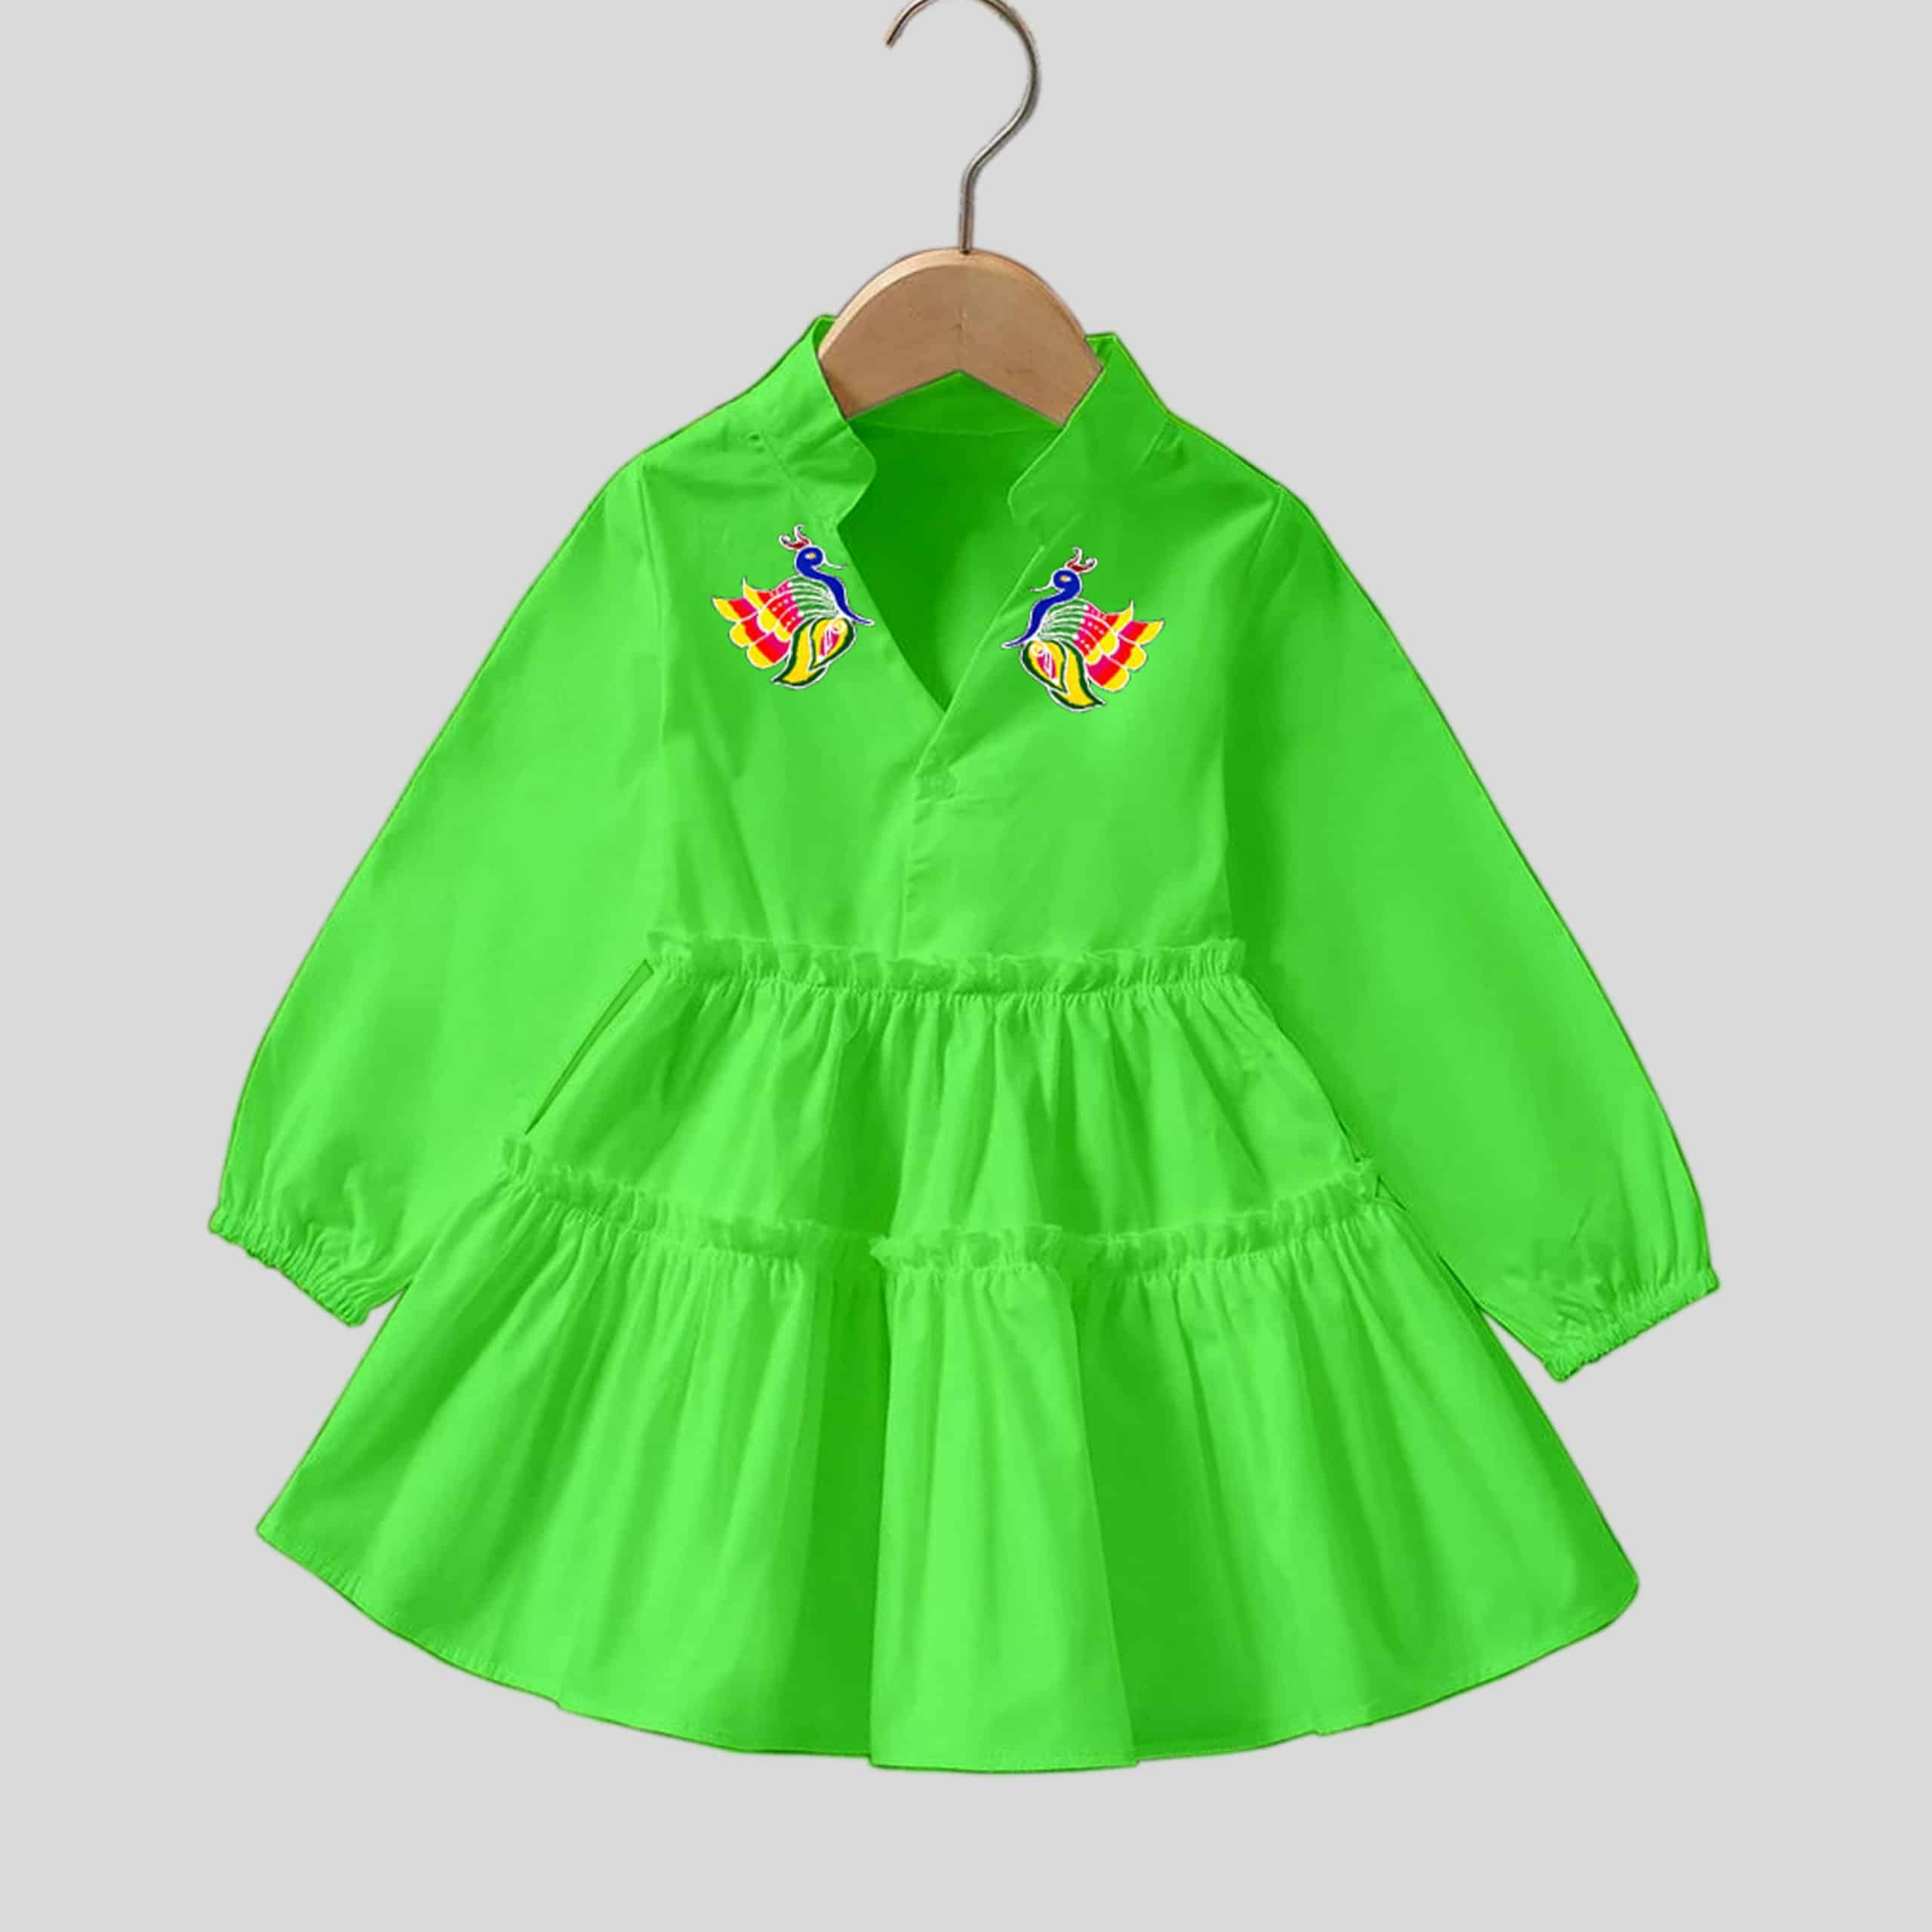 Green butterfly print frock for casual wear will frilled bottom- RKFCW193